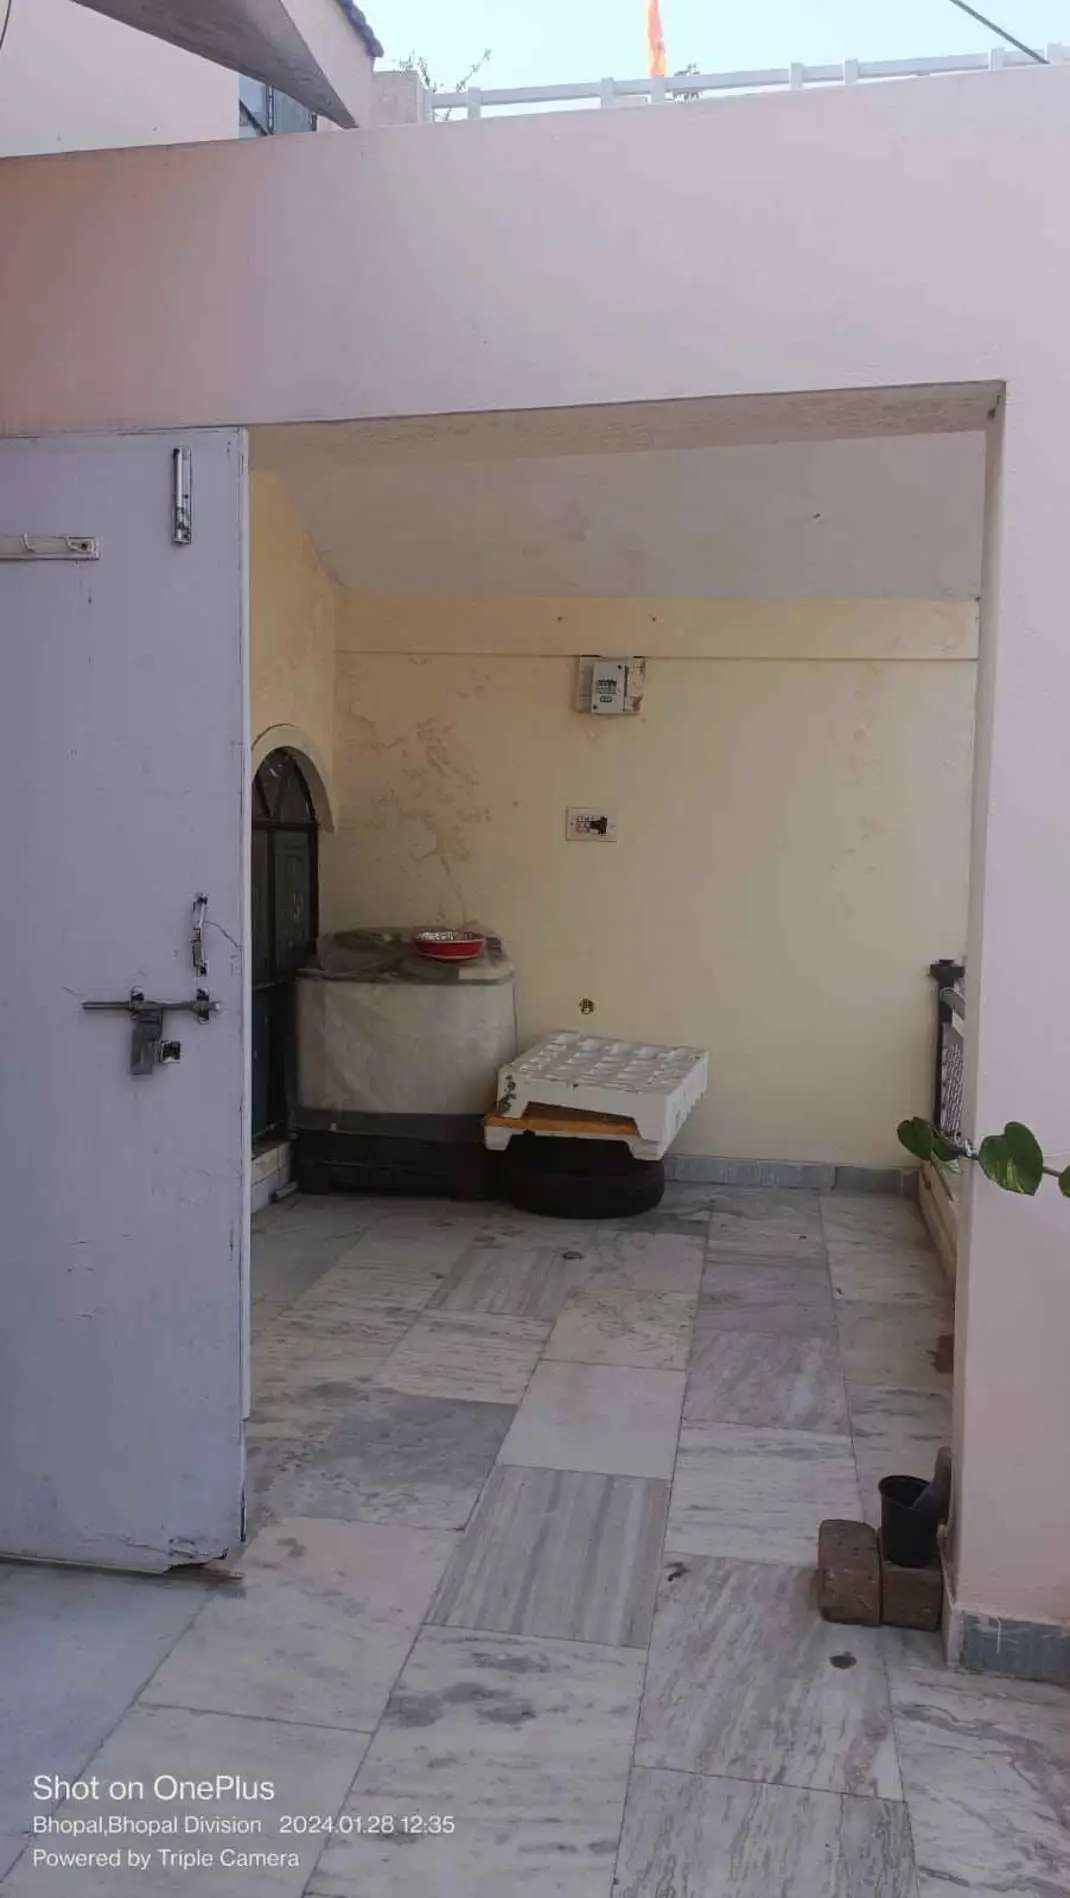 4 Bed/ 4 Bath Sell House/ Bungalow/ Villa; 1,000 sq. ft. lot for sale @Sundar nagar ayodhya bypass road Bhopal 